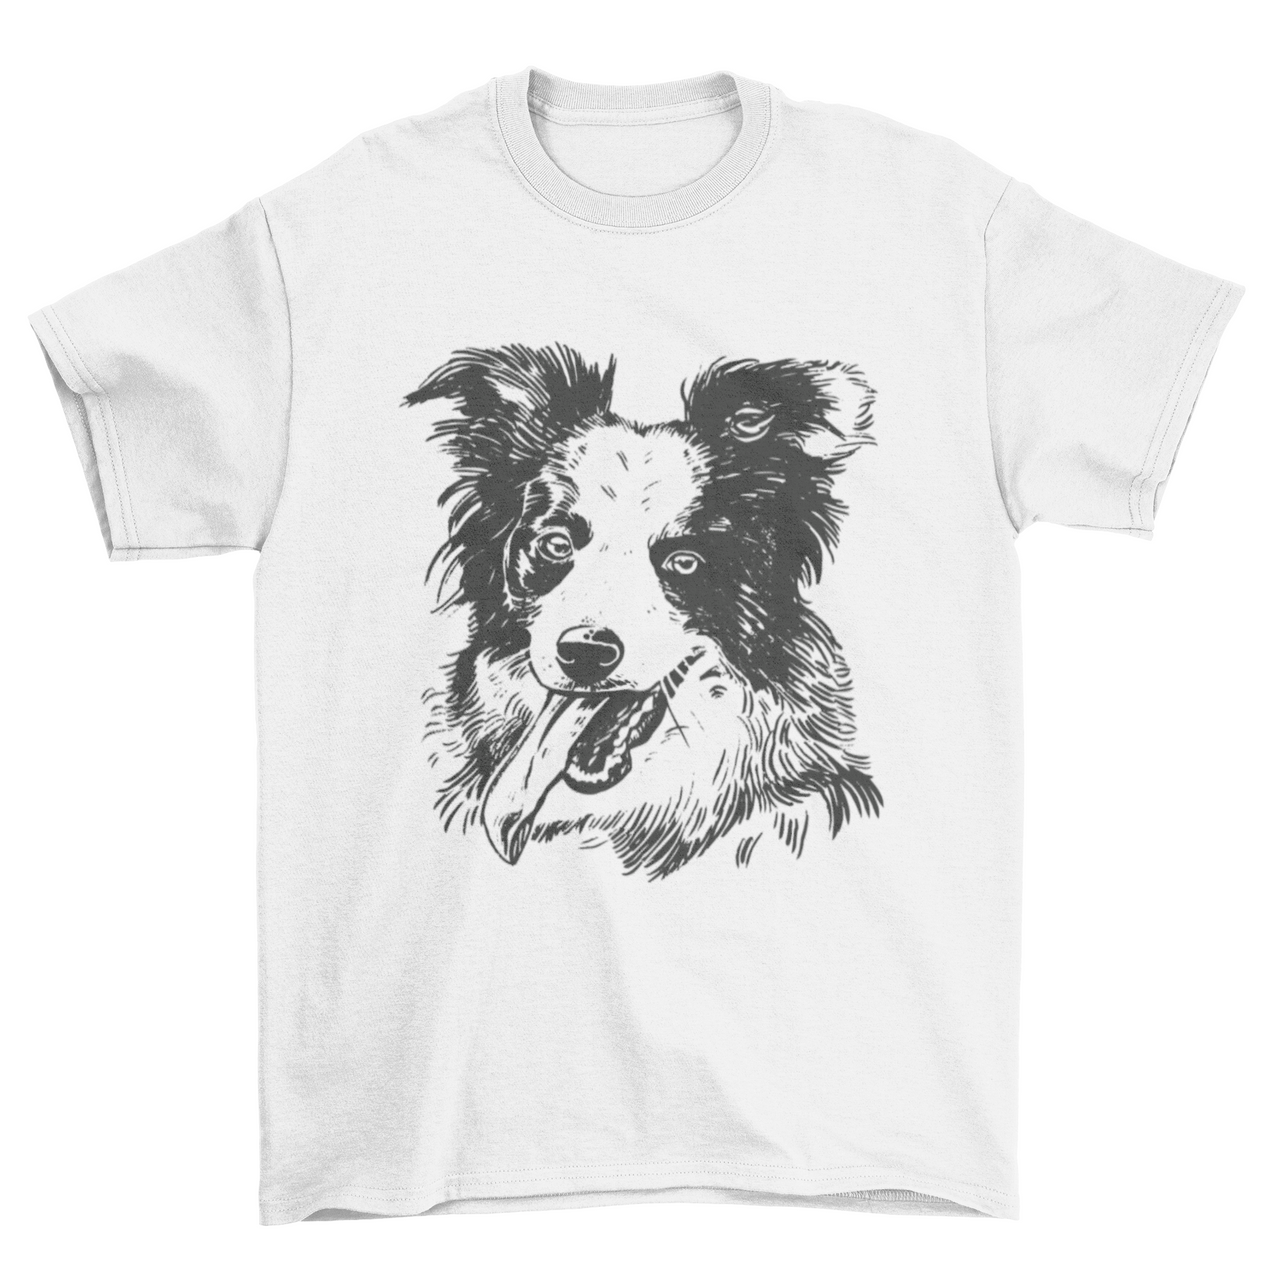 Border collie dog t-shirt